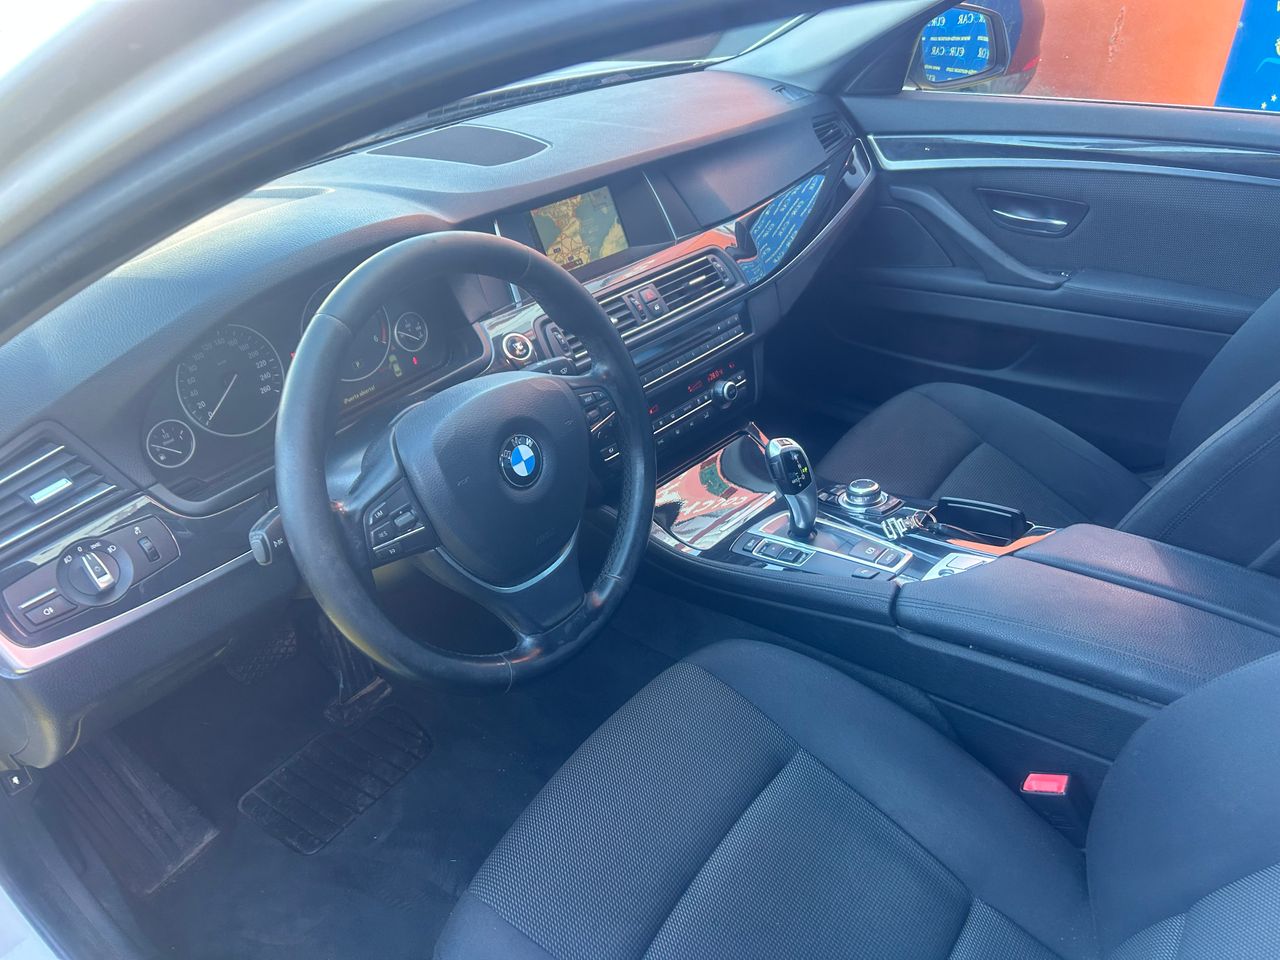 Foto BMW Serie 5 11